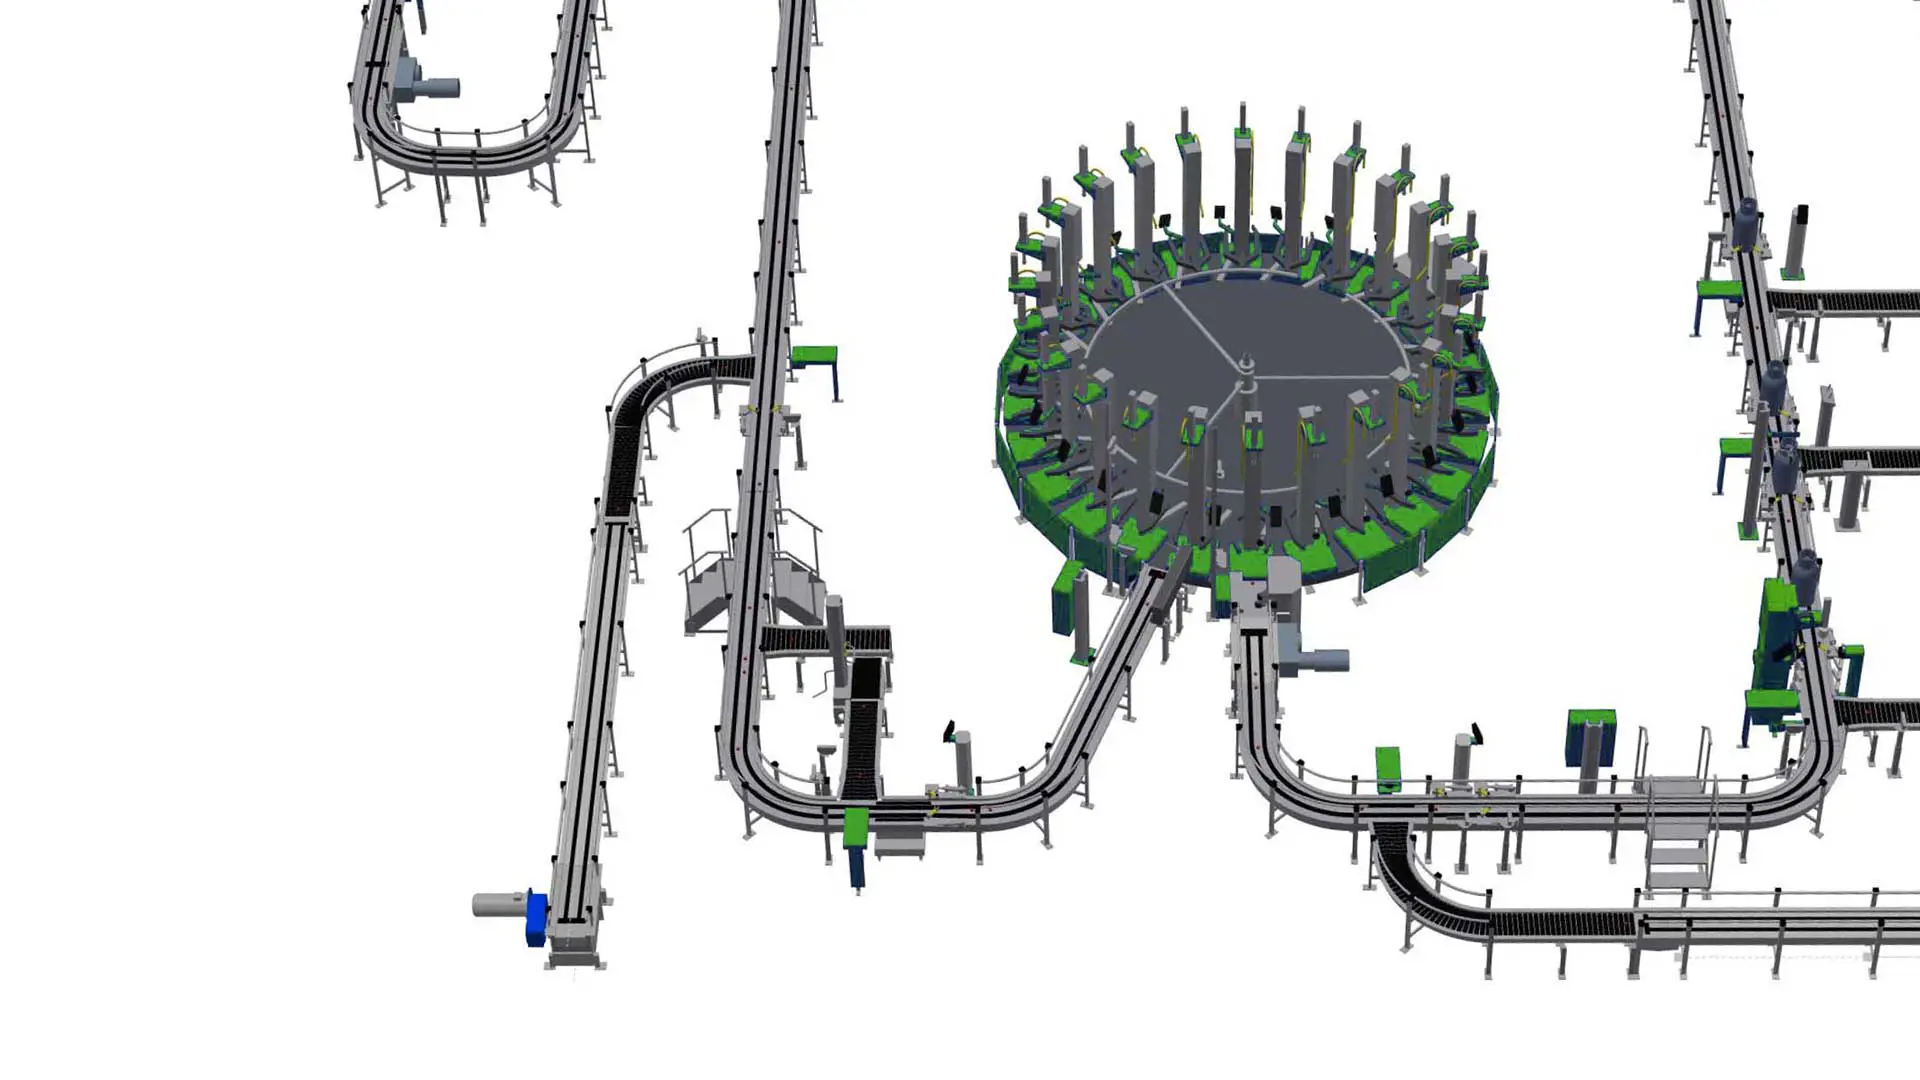 3D illustration of chain conveyor system